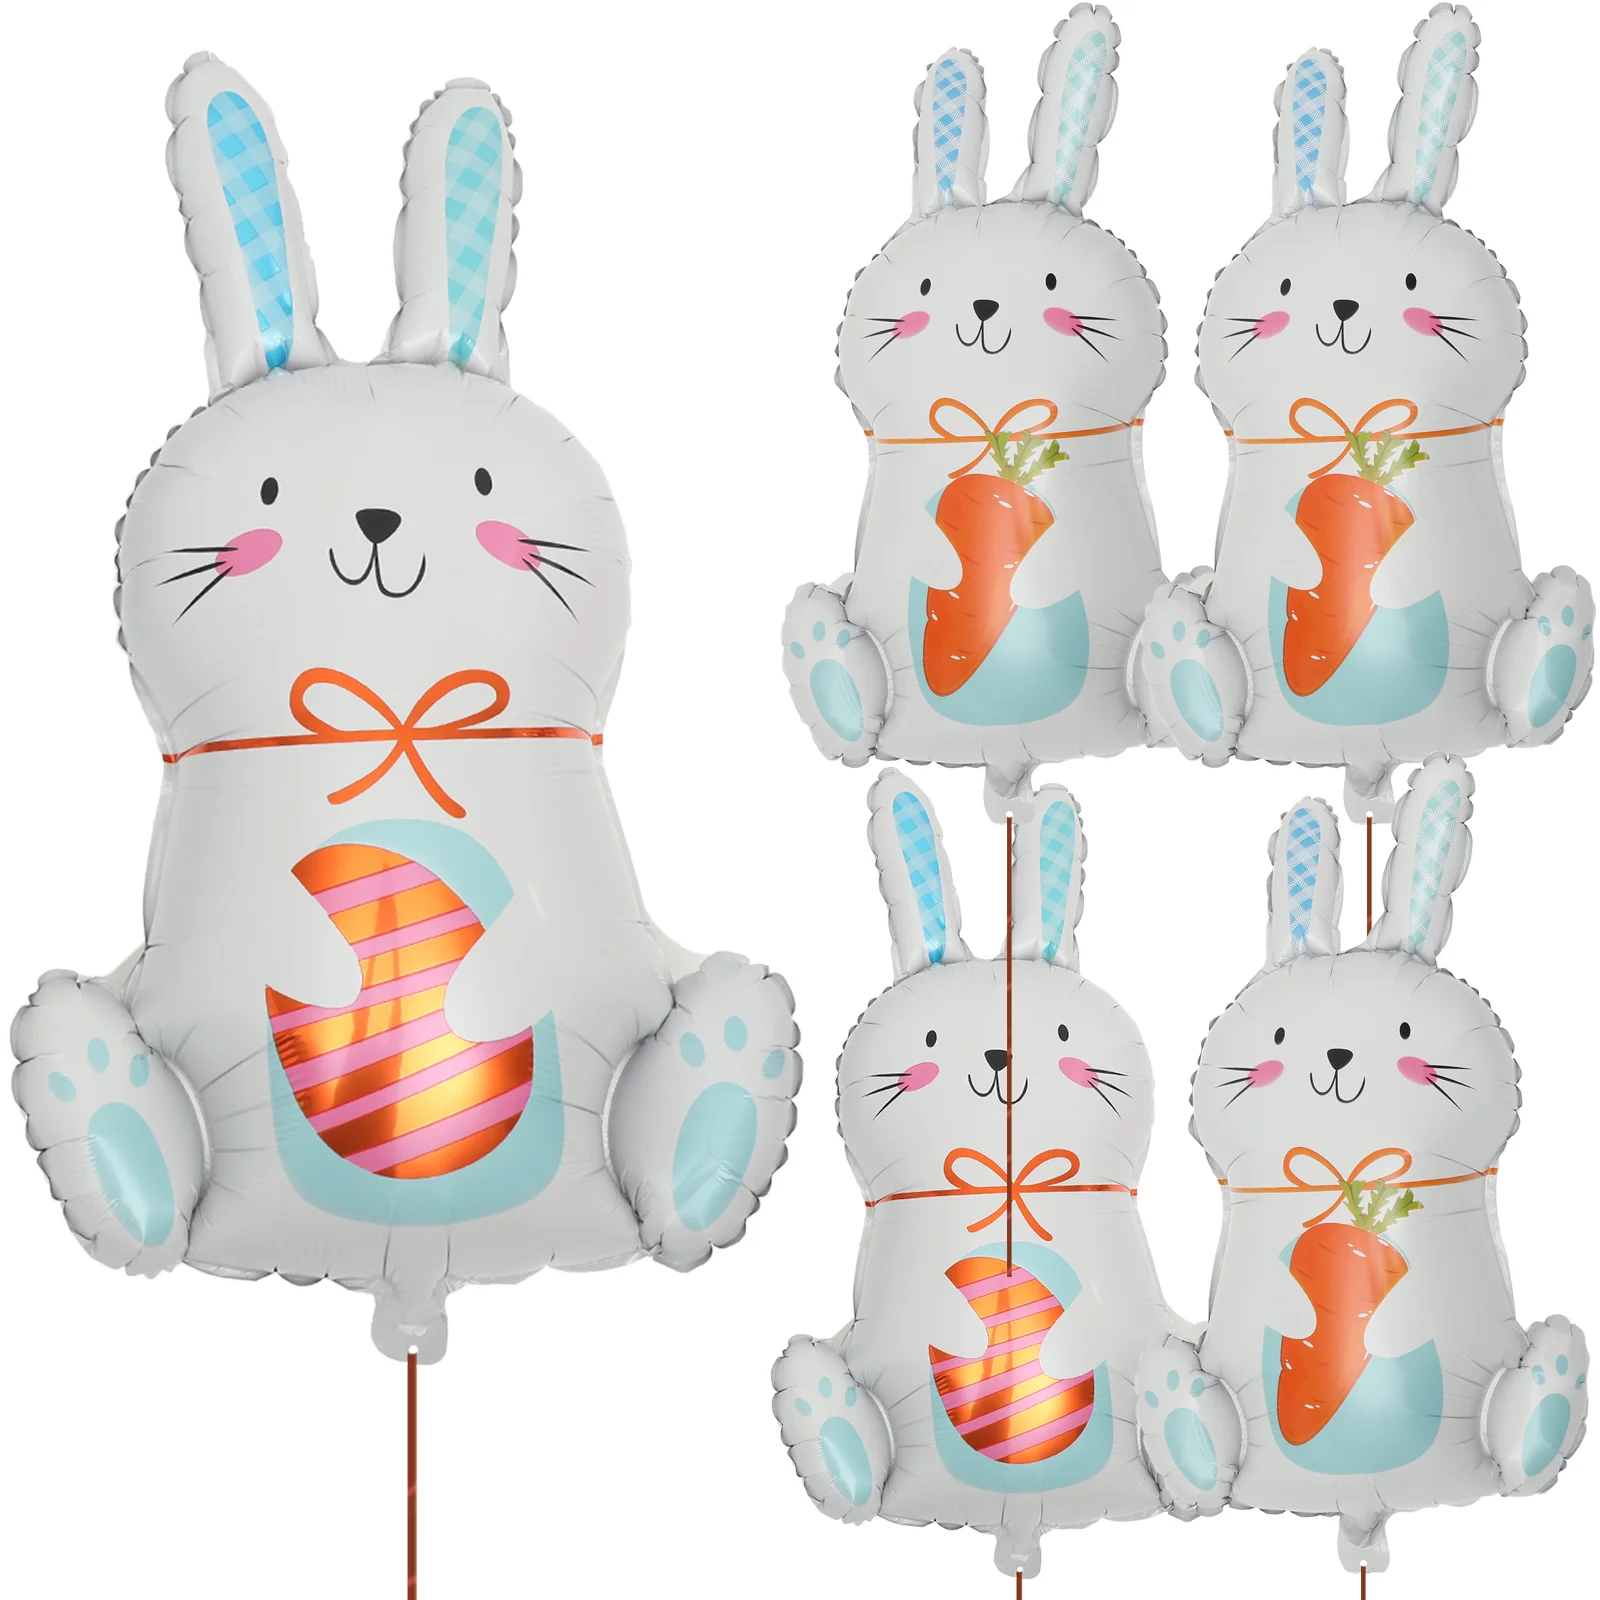 

6 Pcs Bunny Foil Balloons Exquisite Easter Prop Decor Rabbit Decoration Scene The Gift Decorative